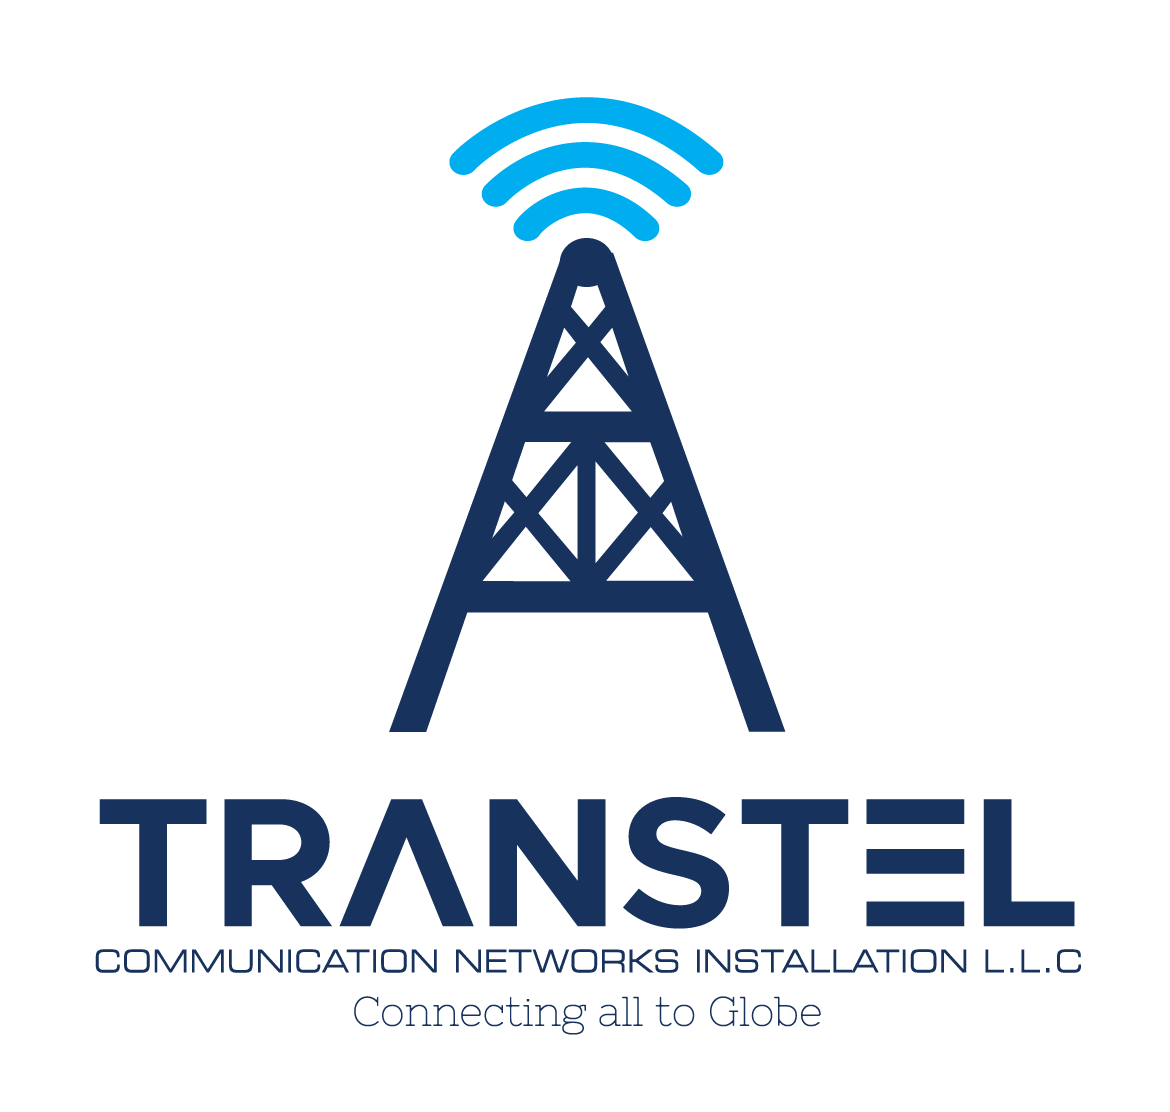 Transtel Communication Networks Installation LLC